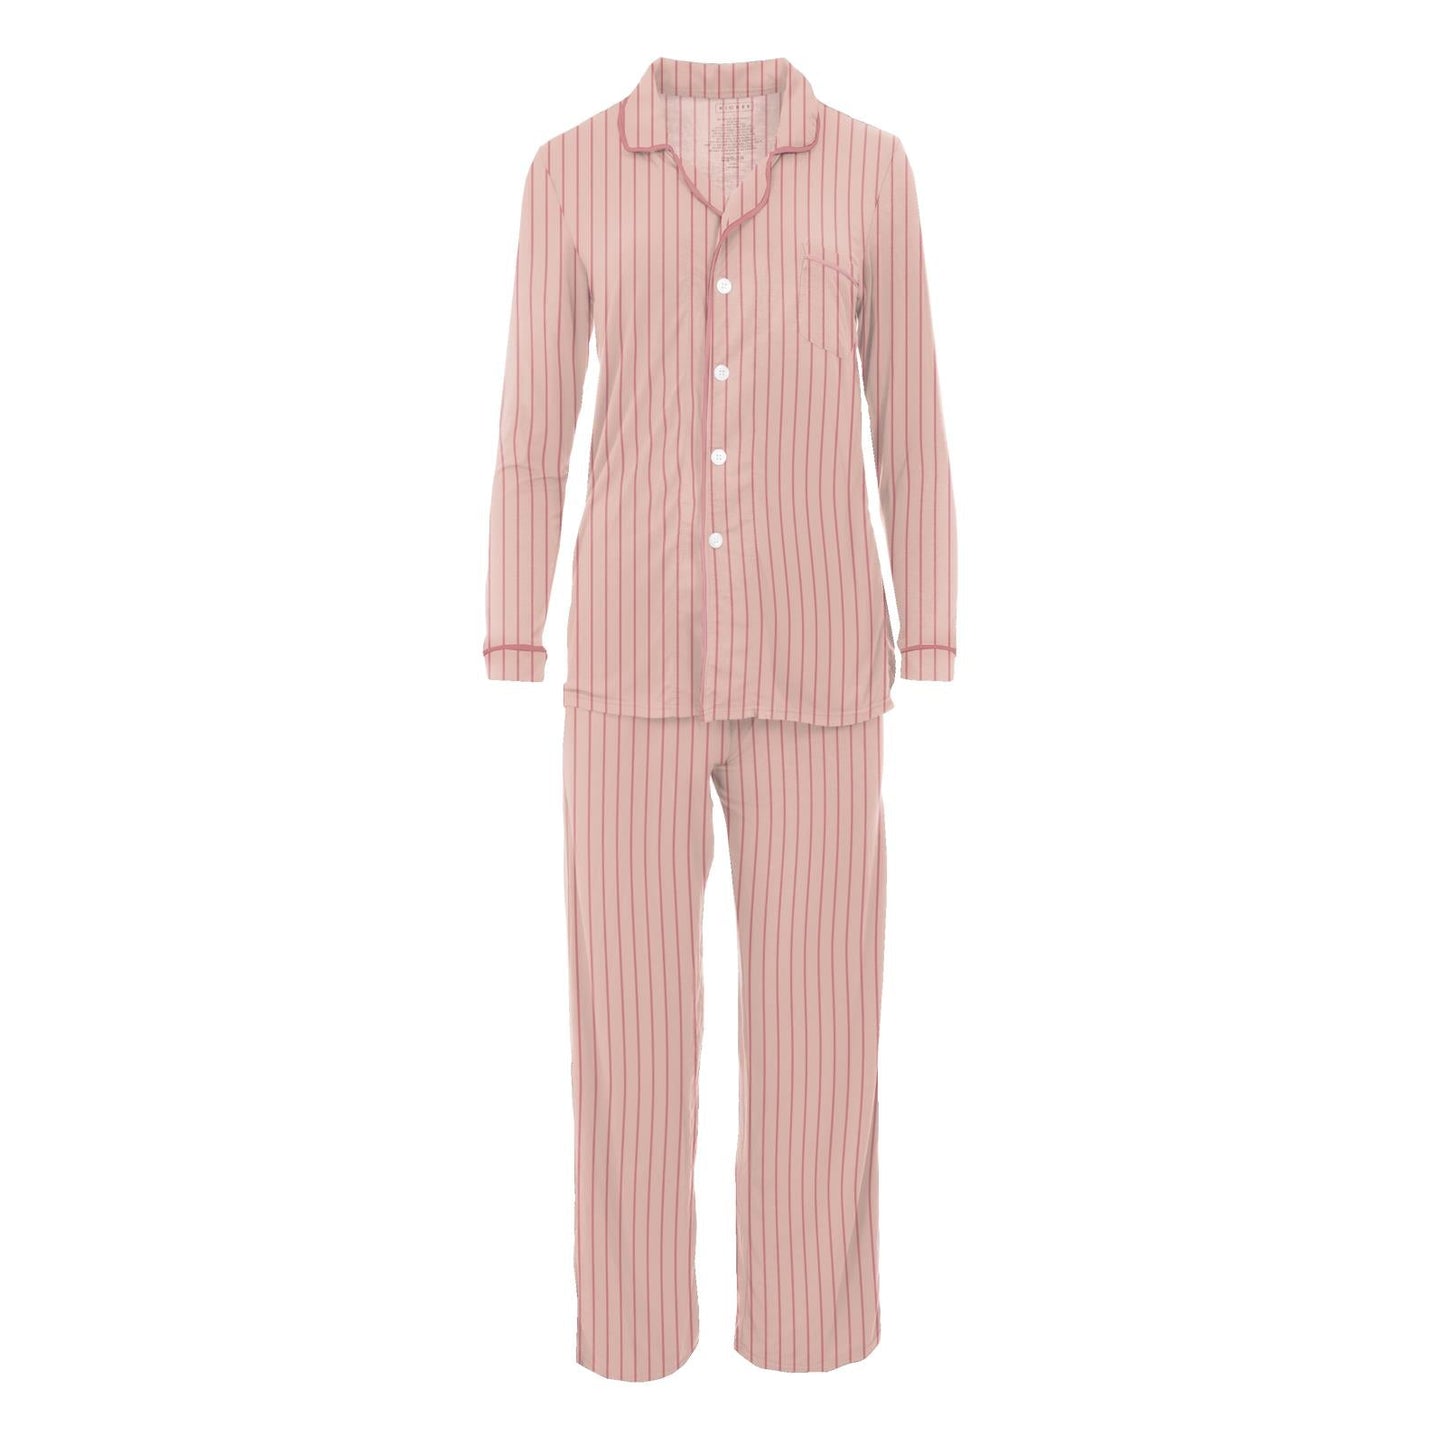 Kickee Pants Women's Long Sleeve Collared Pajama Set in Pinstripe